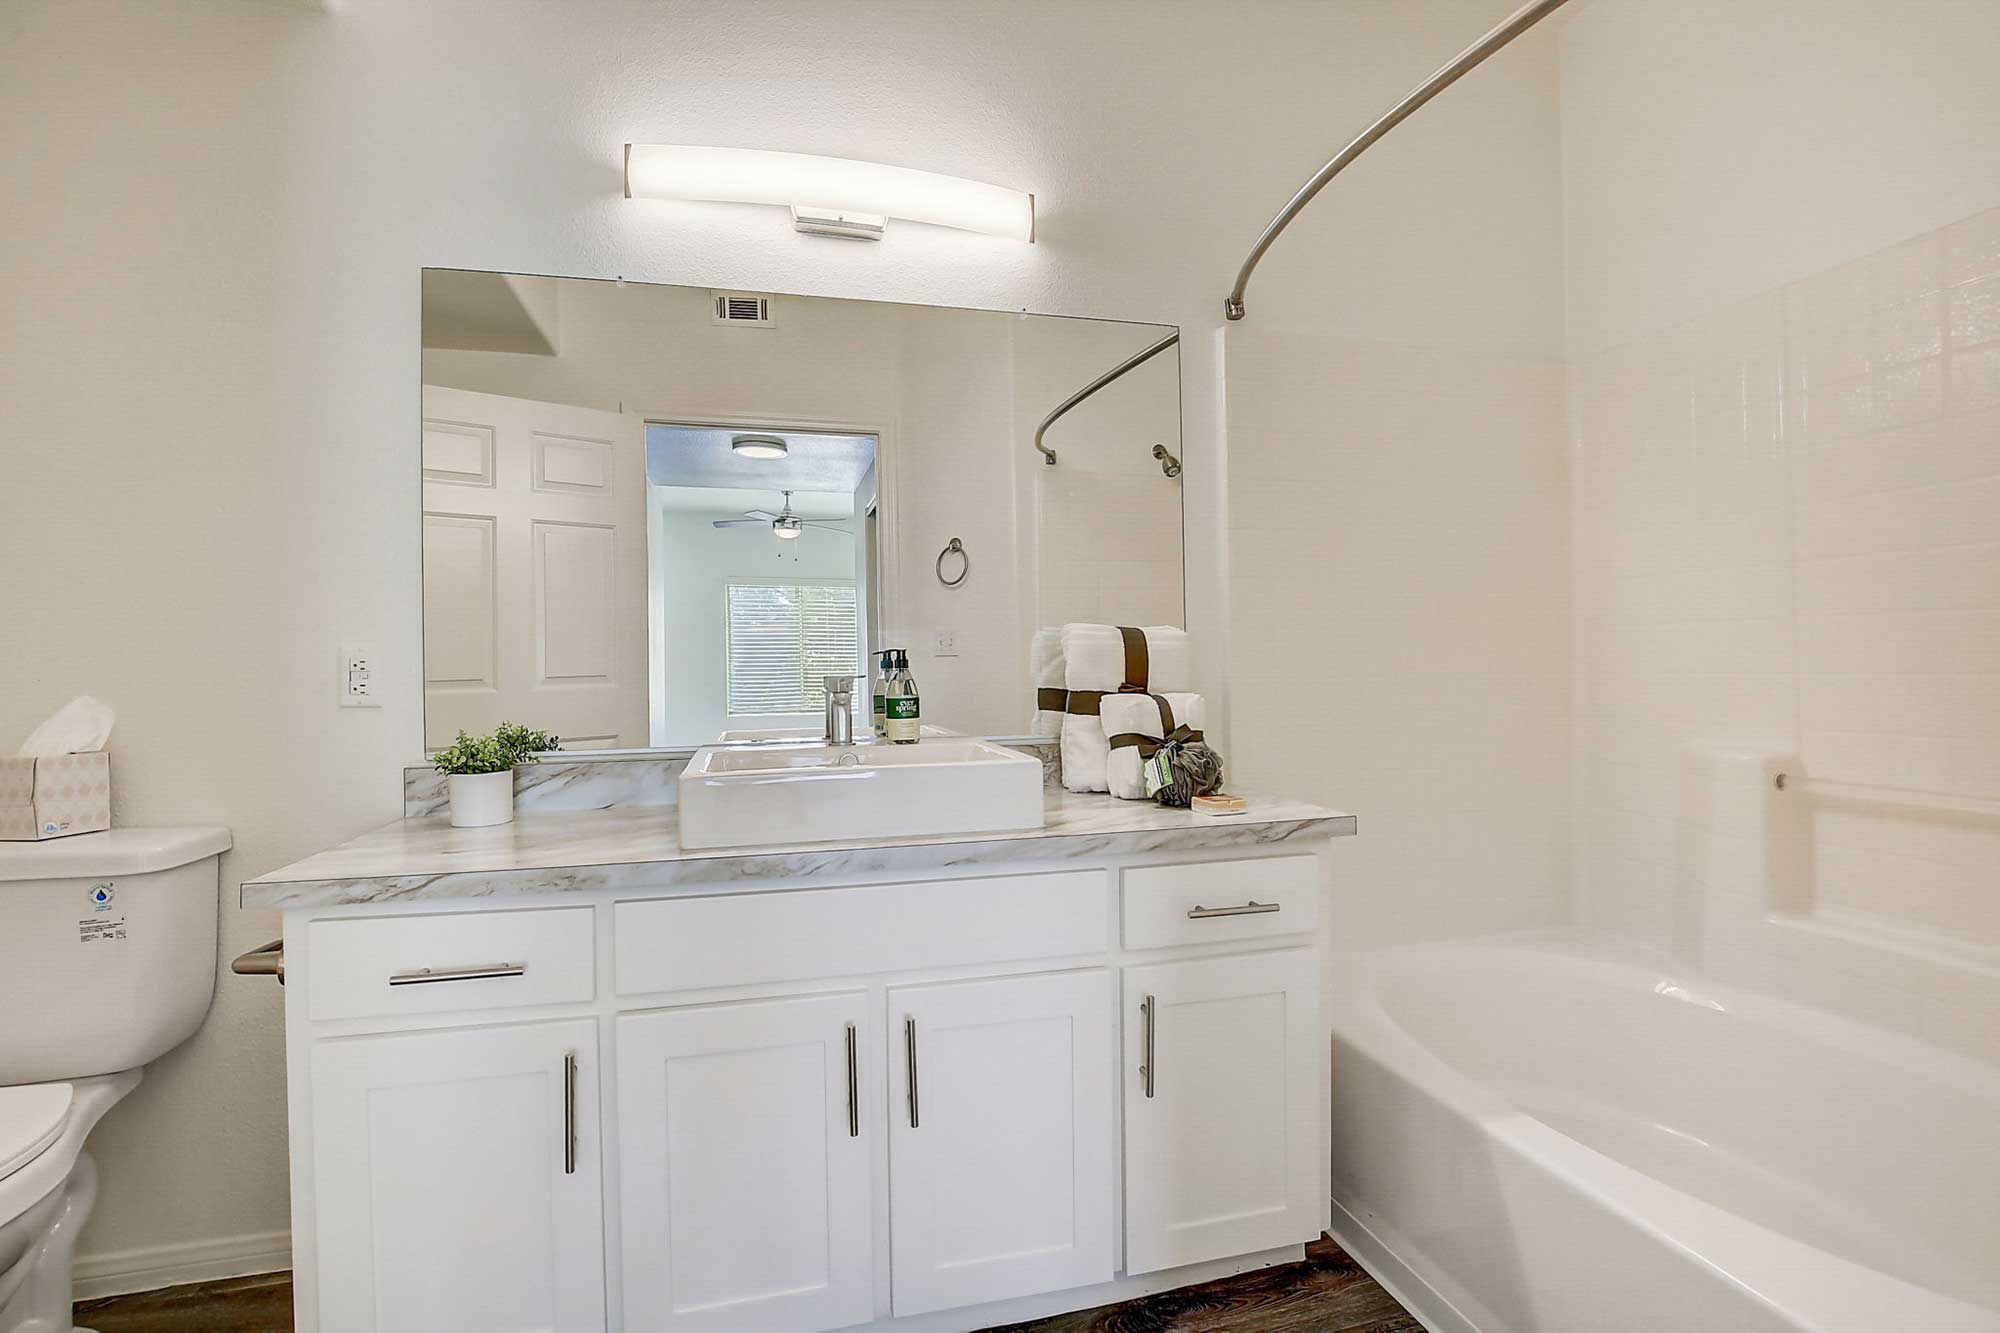 Ritiro Apartments Las Vegas bathroom interior vanity and sink